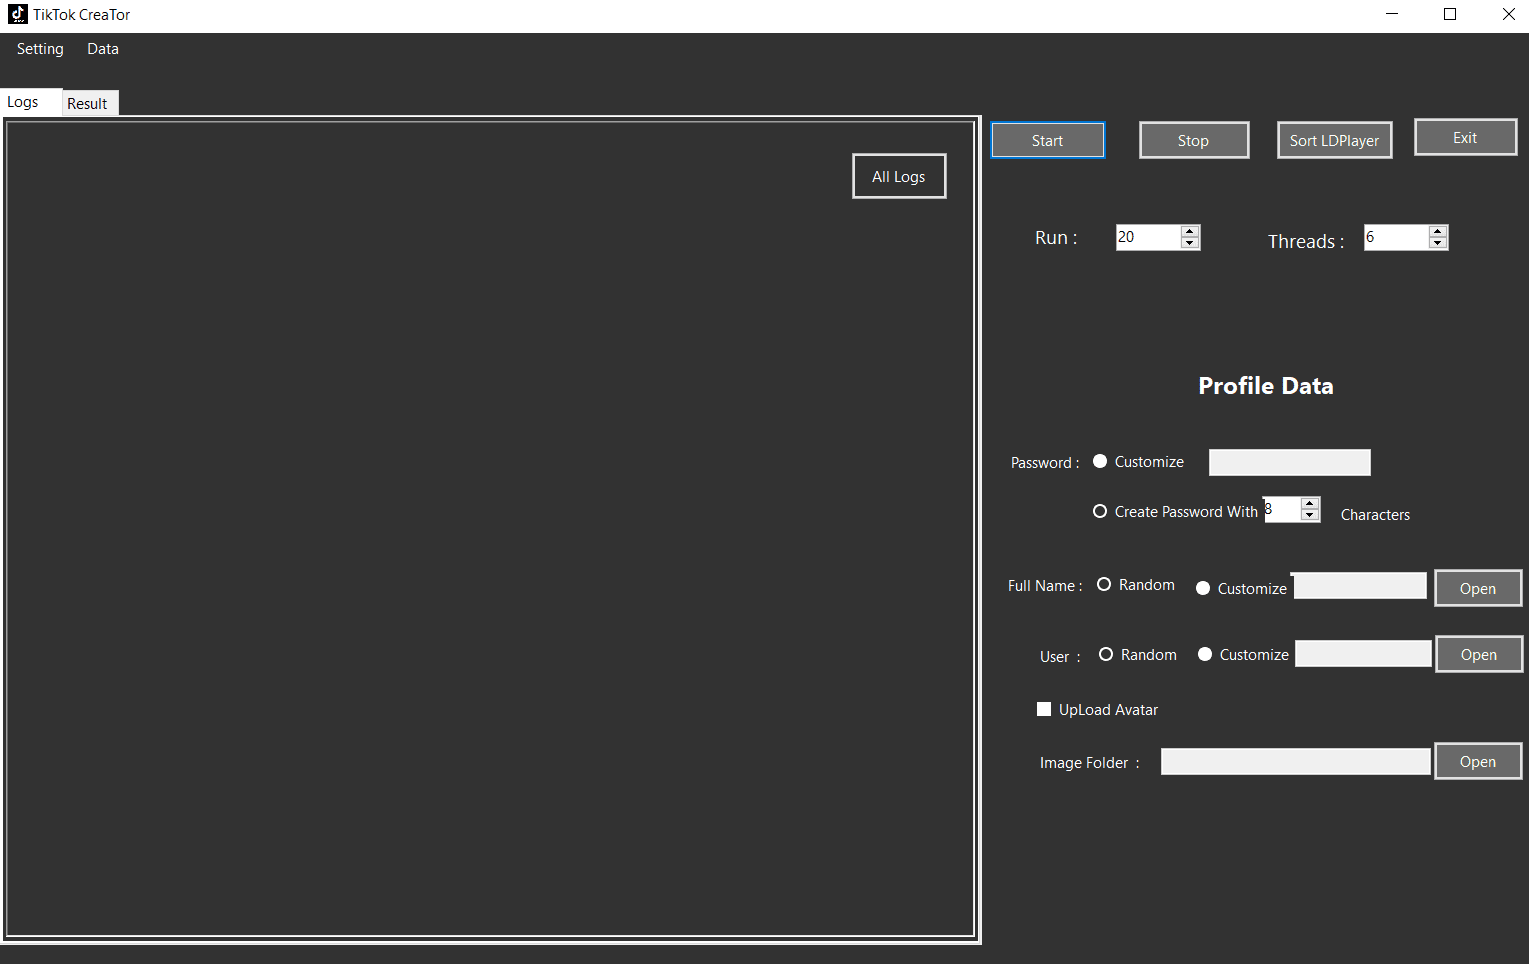 TikTokCreator - interface